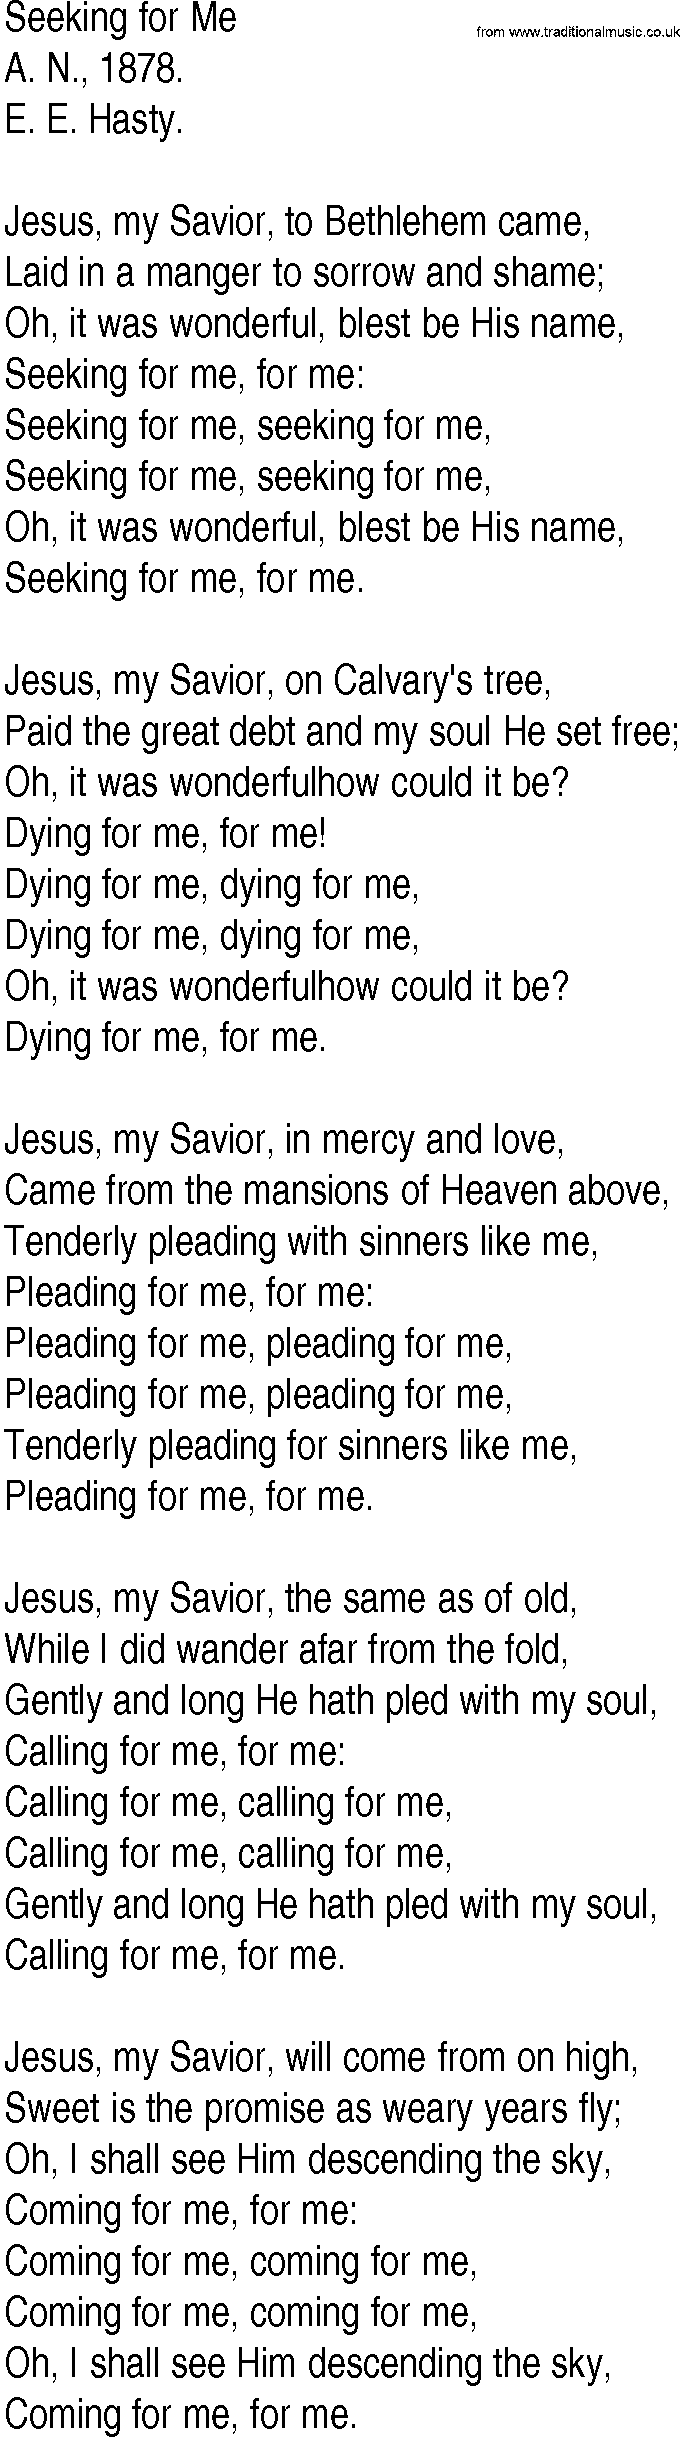 Hymn and Gospel Song: Seeking for Me by A N lyrics